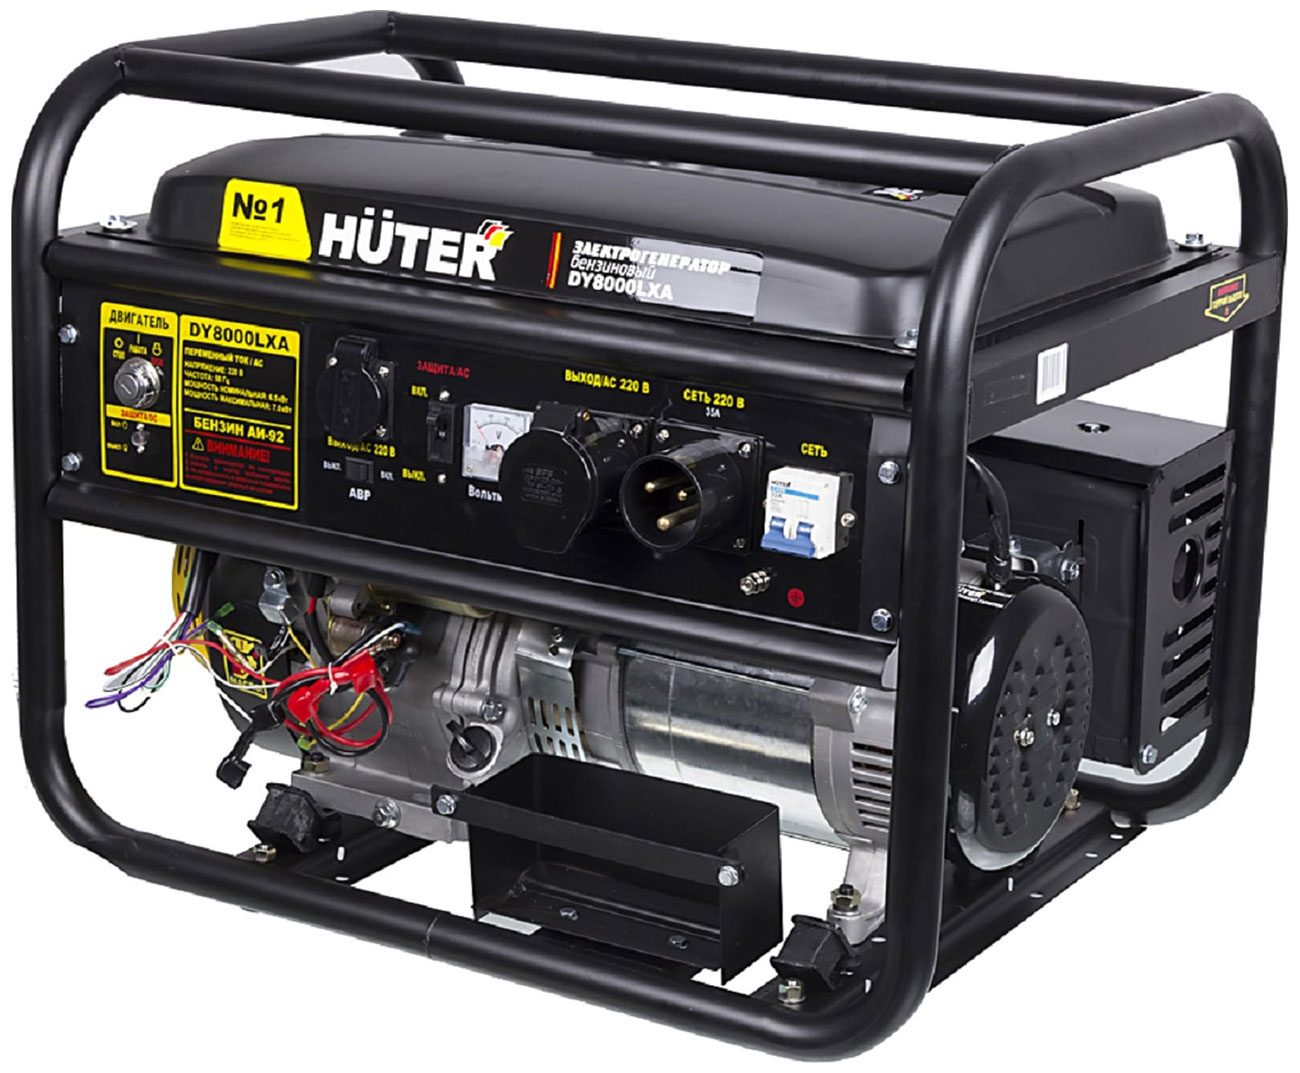 Электрический генератор и электростанция Huter DY8000LXA цена и фото